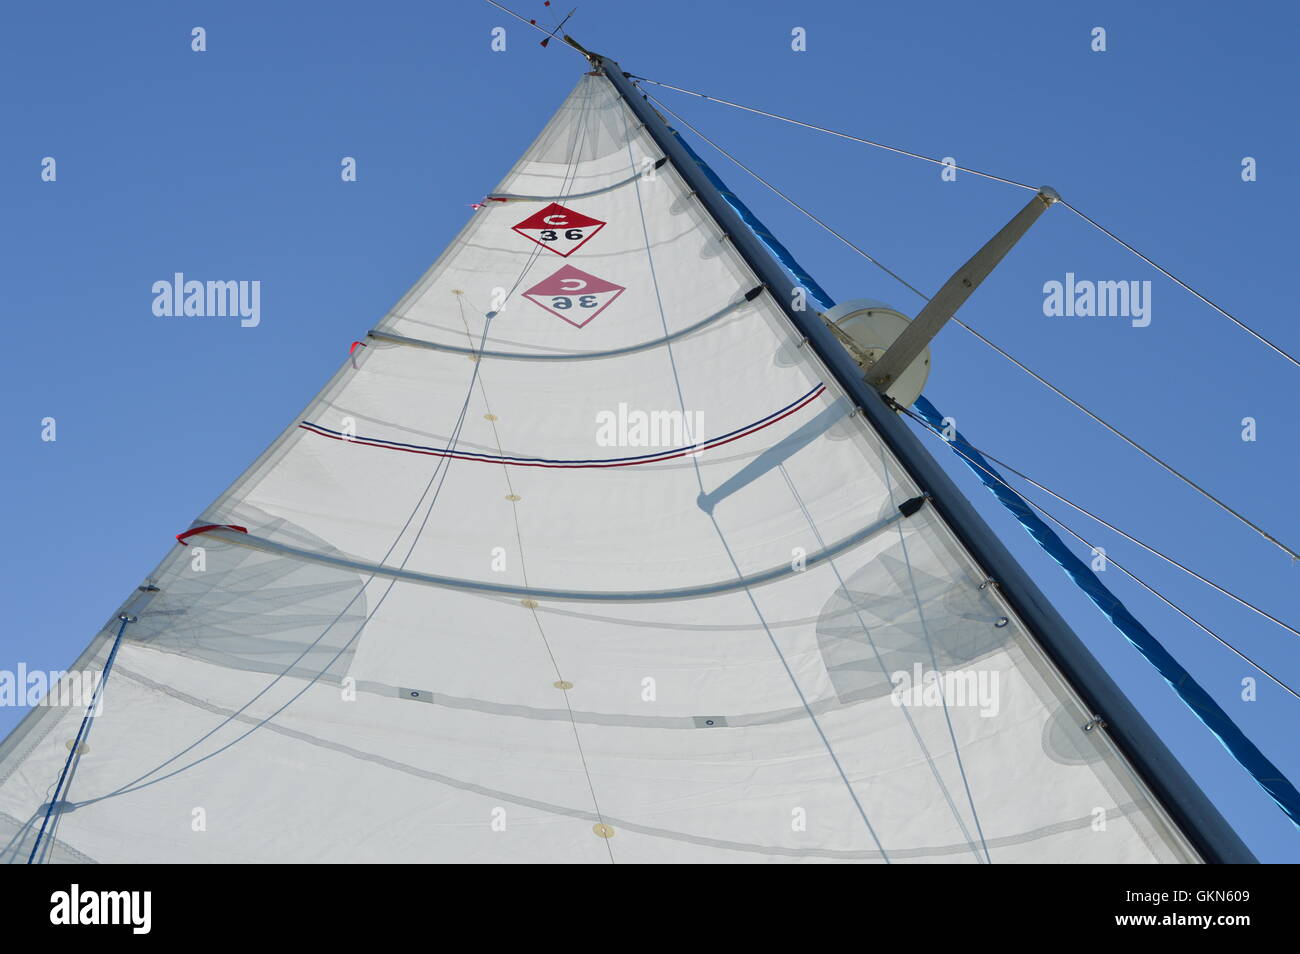 Raising the sail Stock Photo